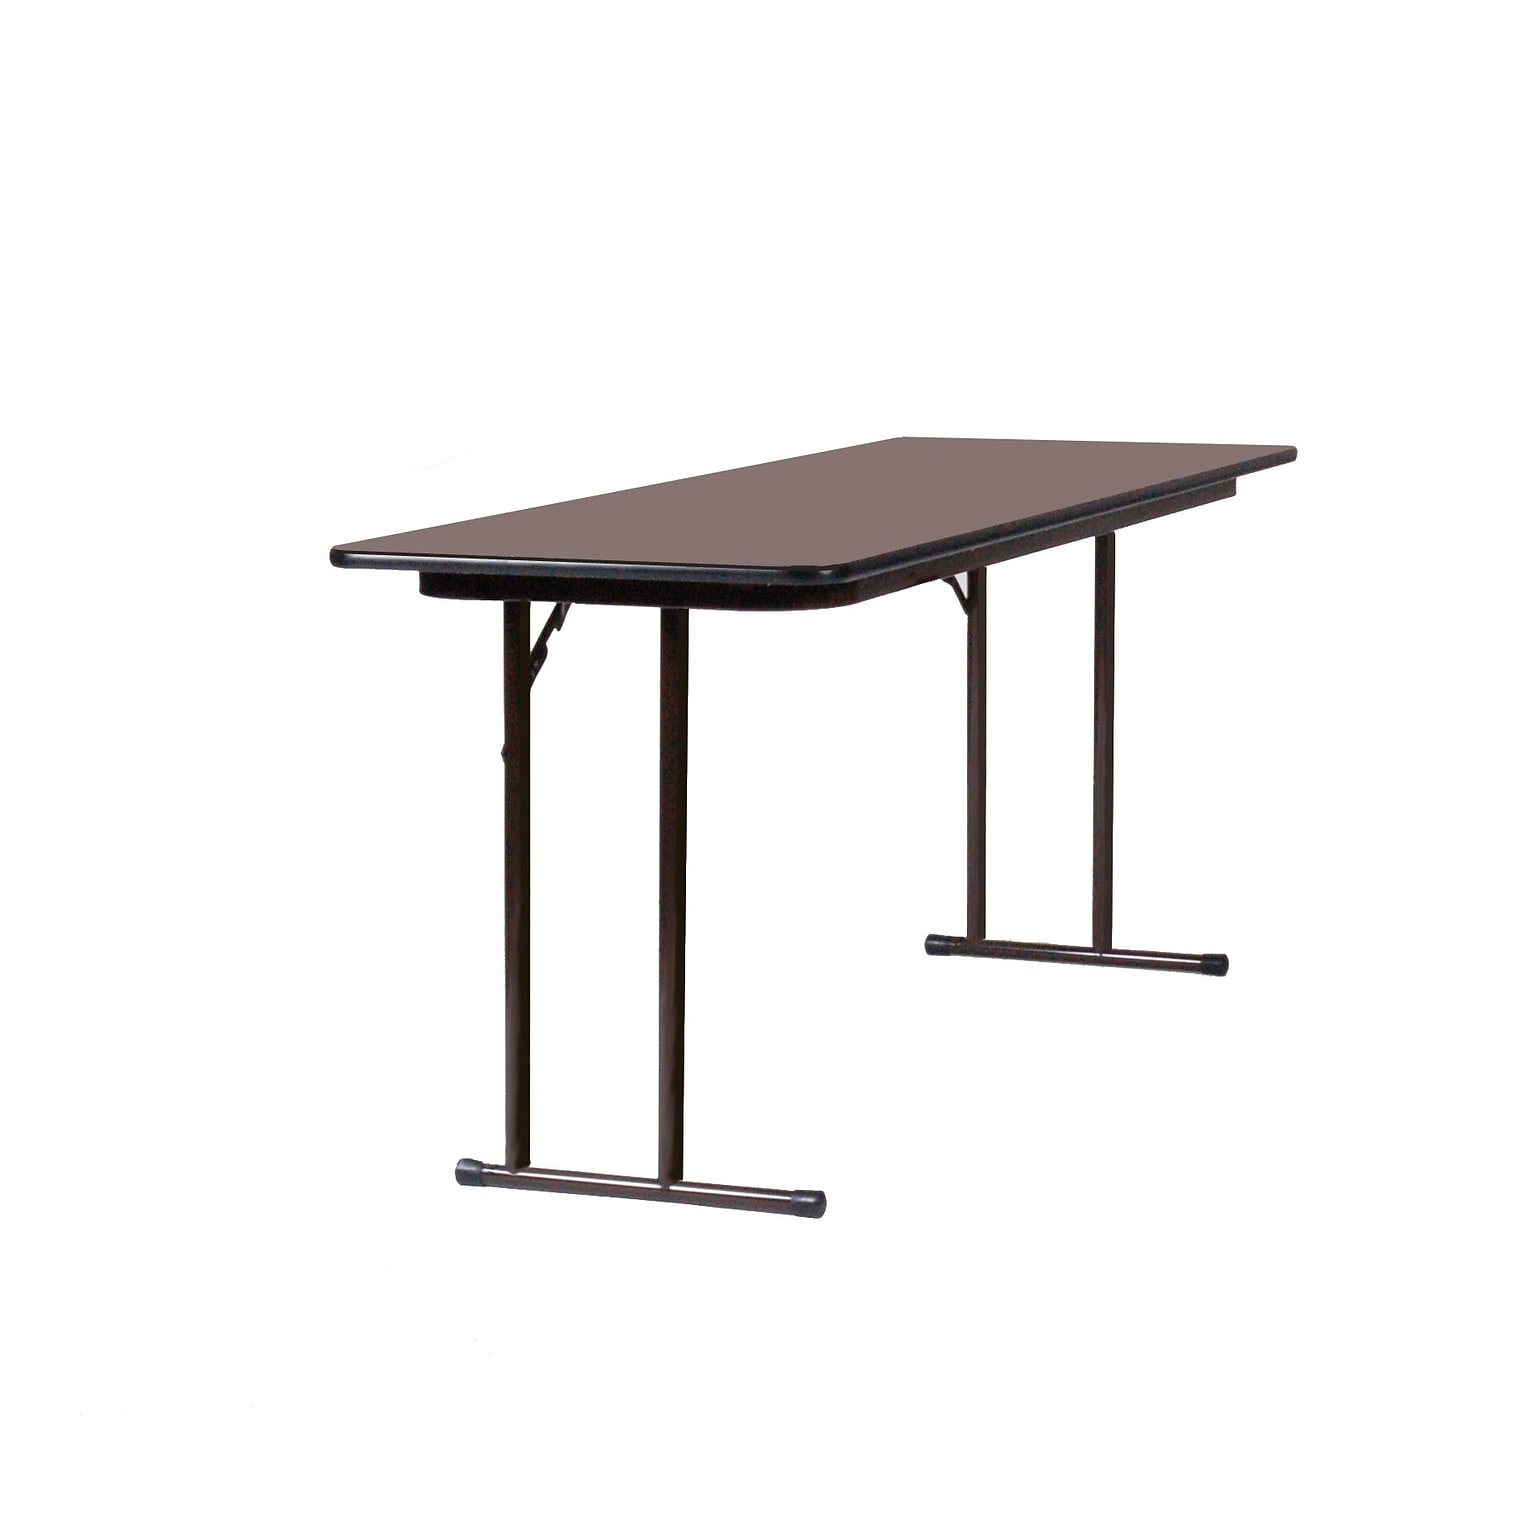 Correll 72-inch Wood, Steel & Plastic High-Pressure Folding Seminar Table, Walnut